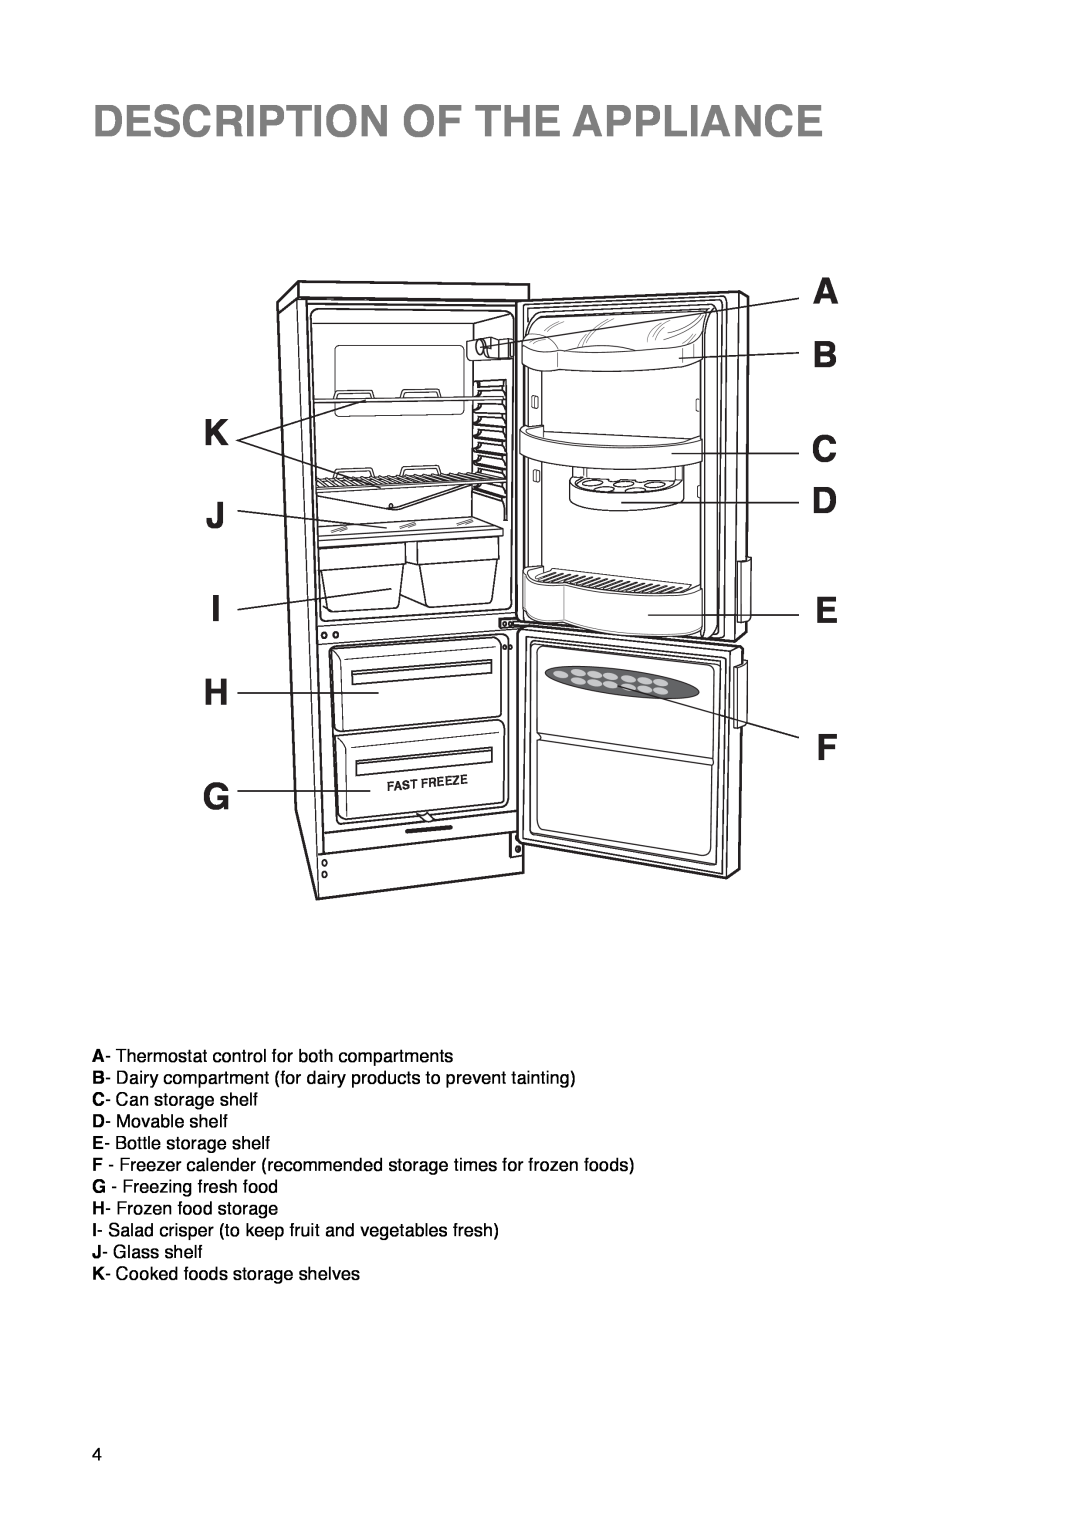 Tricity Bendix FD 852 installation instructions Description Of The Appliance, K J I H G, A B C D E F 